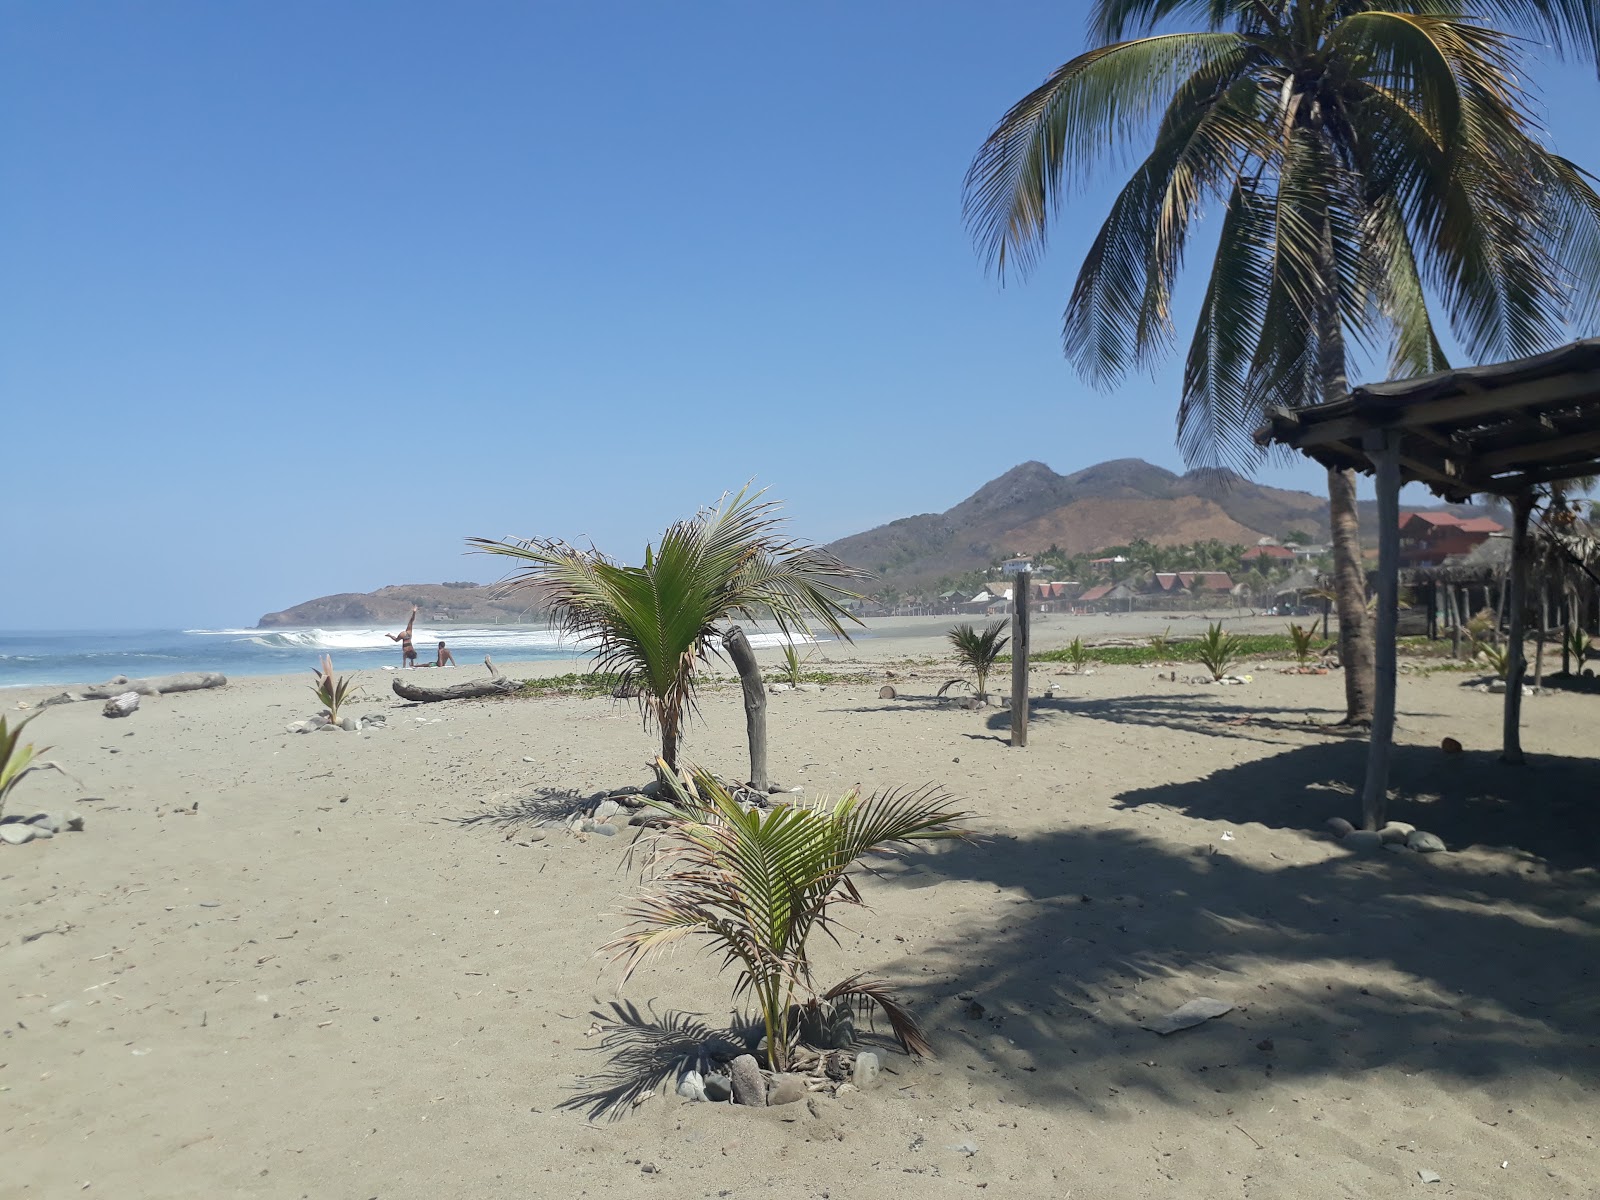 Foto de Playa Nexpa - lugar popular entre os apreciadores de relaxamento